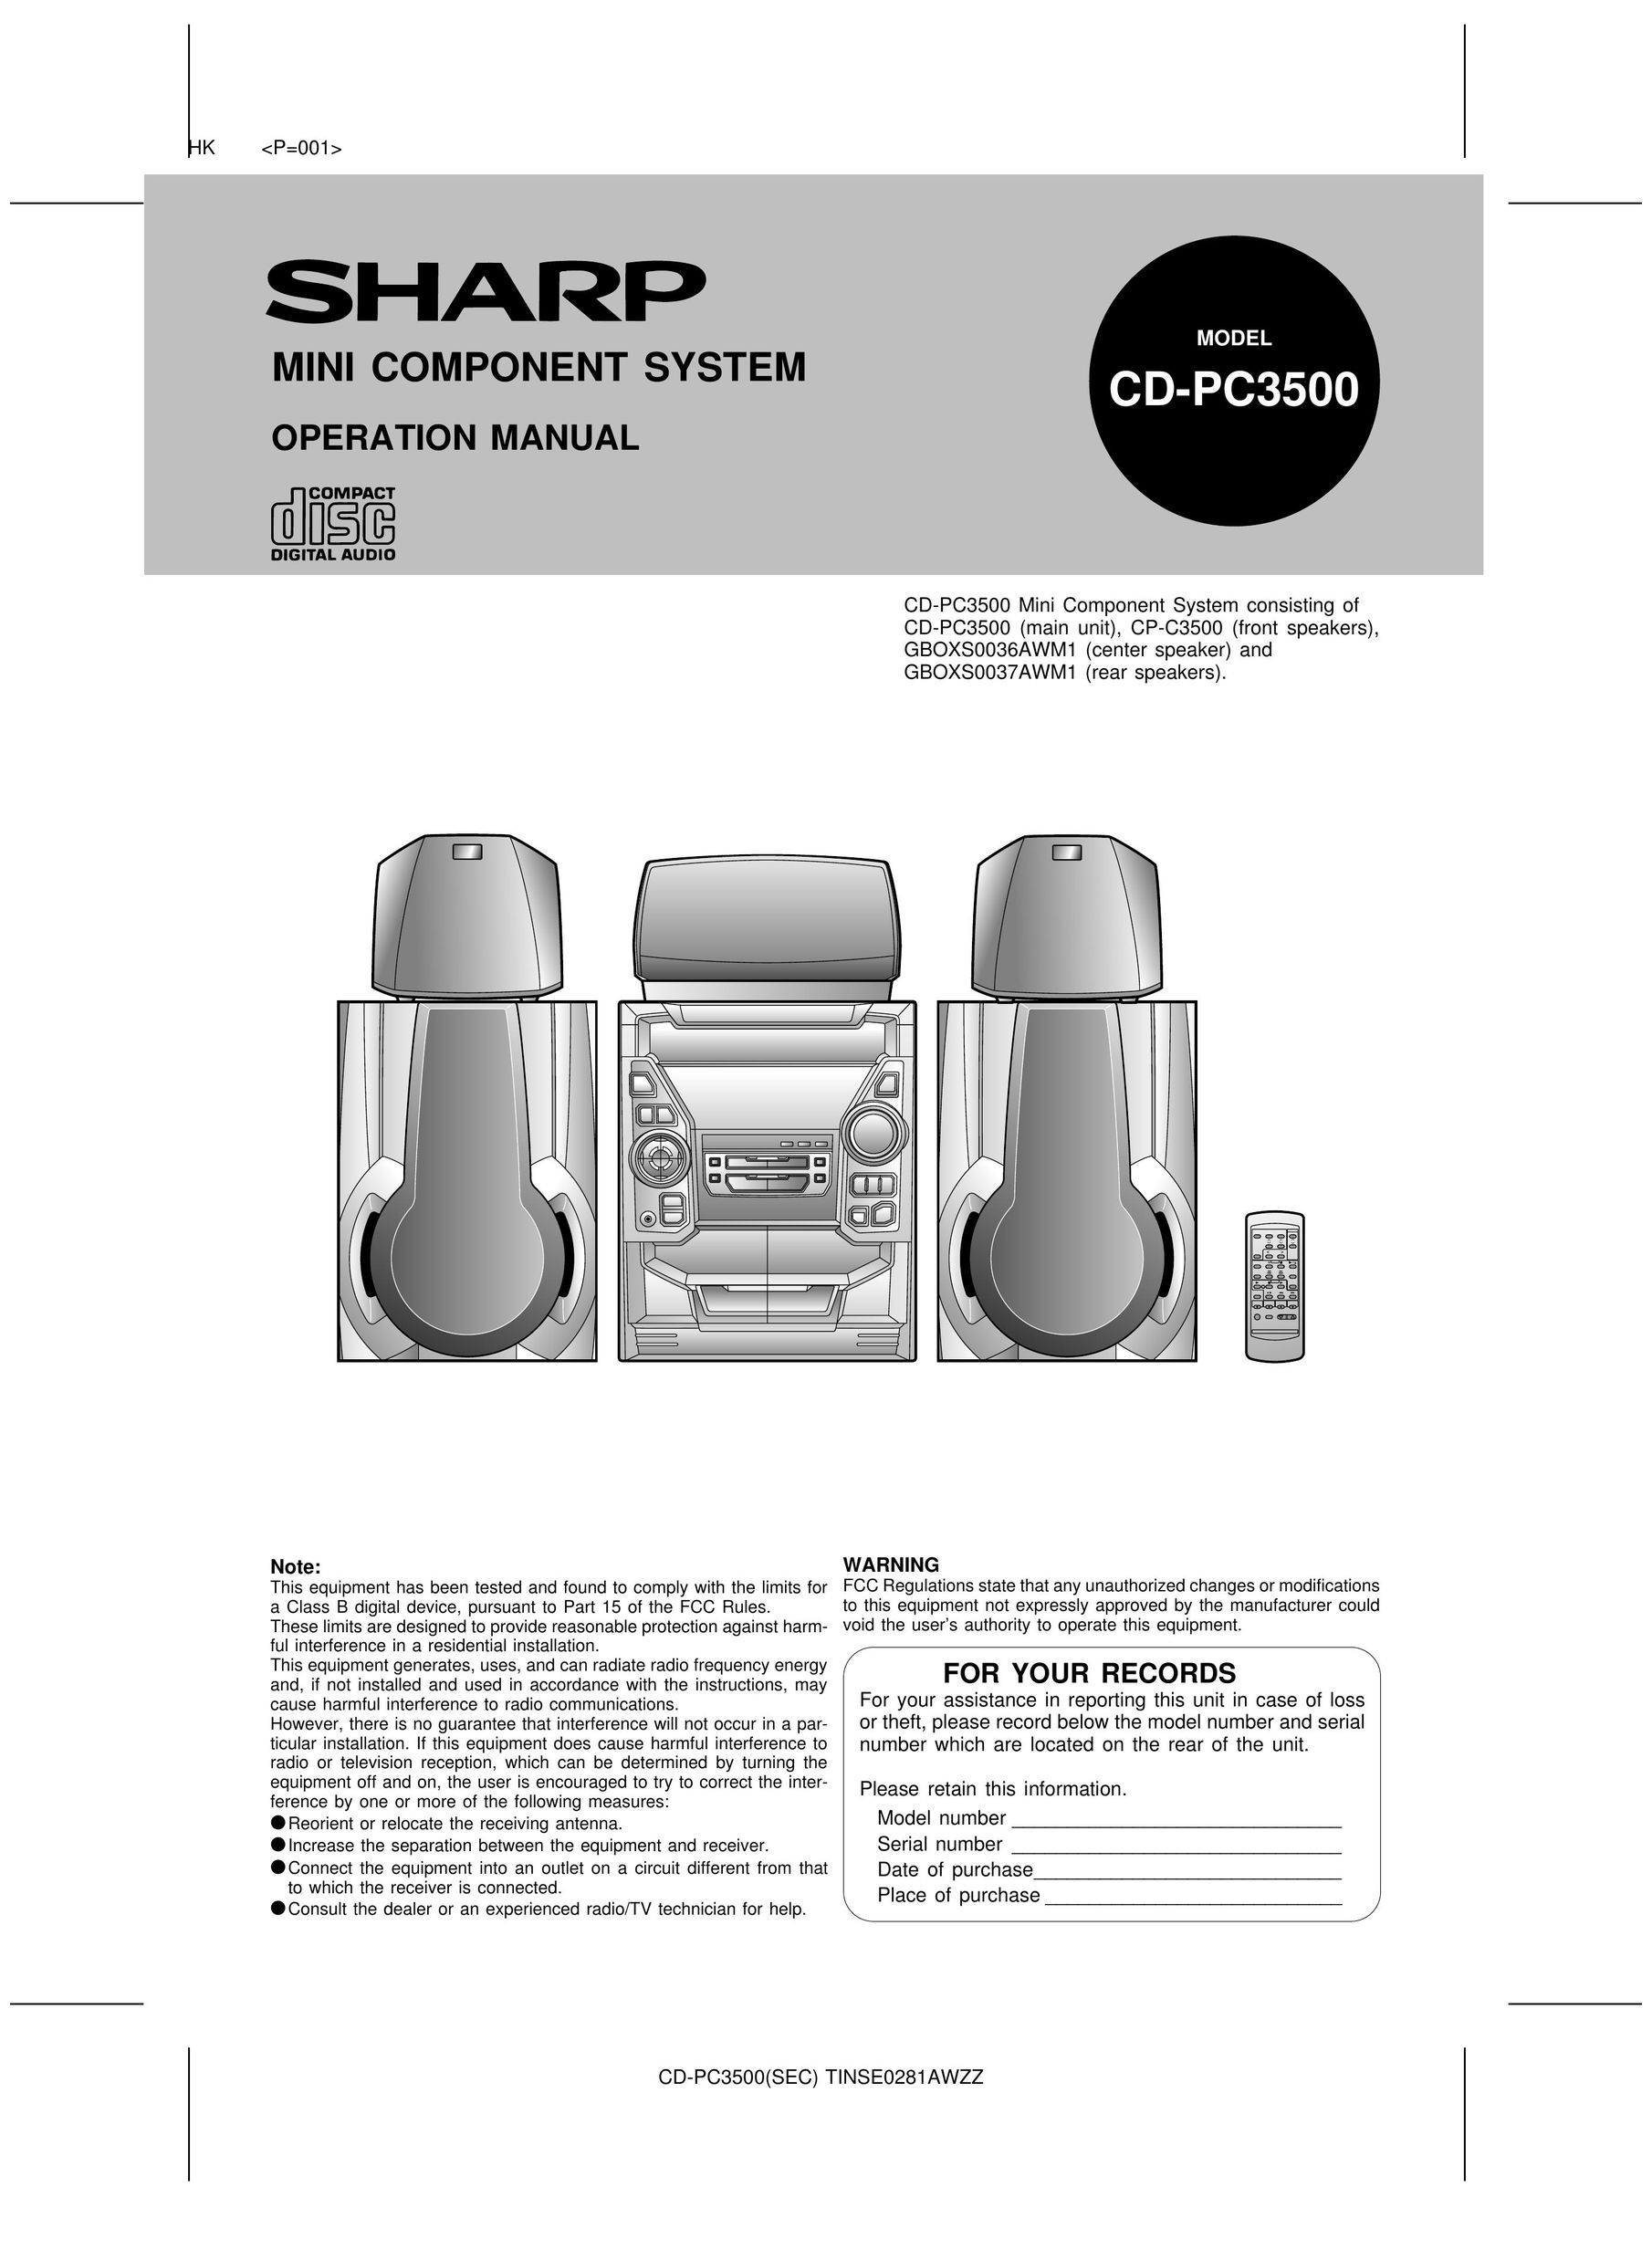 Sharp CD-PC3500 Stereo System User Manual